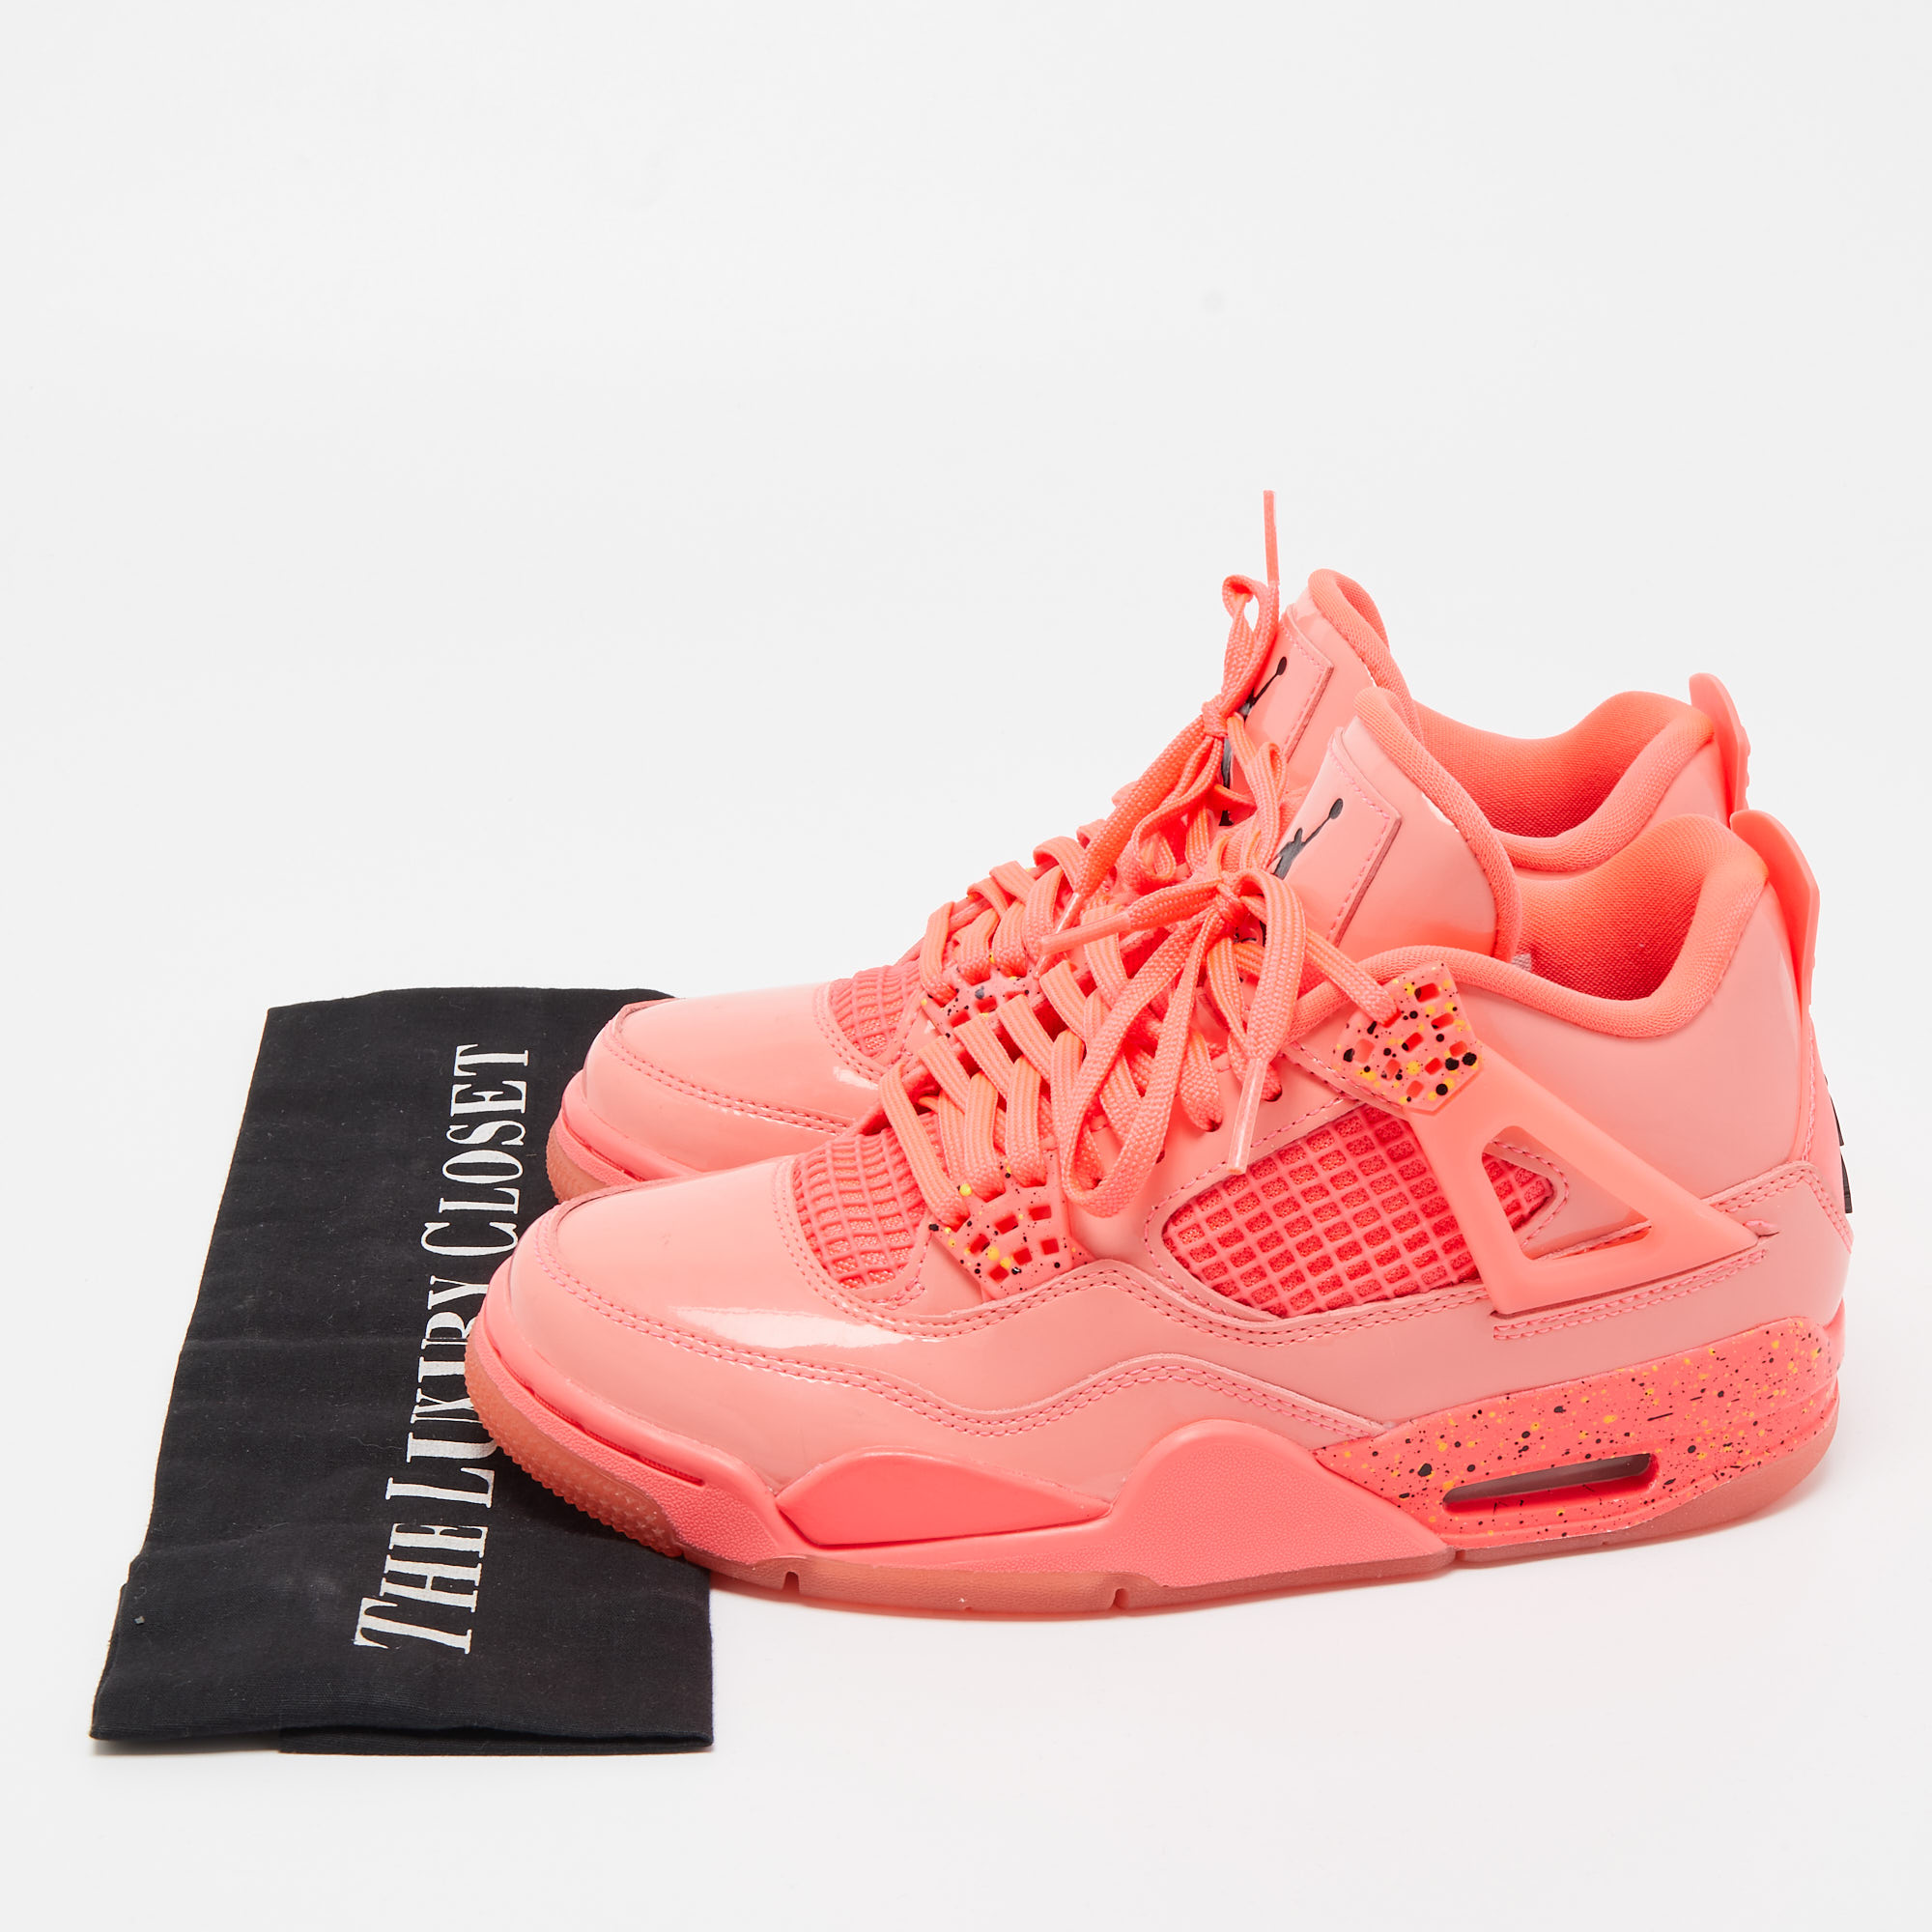 Air Jordans Neon Pink Patent Leather Jordan 4 Hot Punch Sneakers Size 36.5